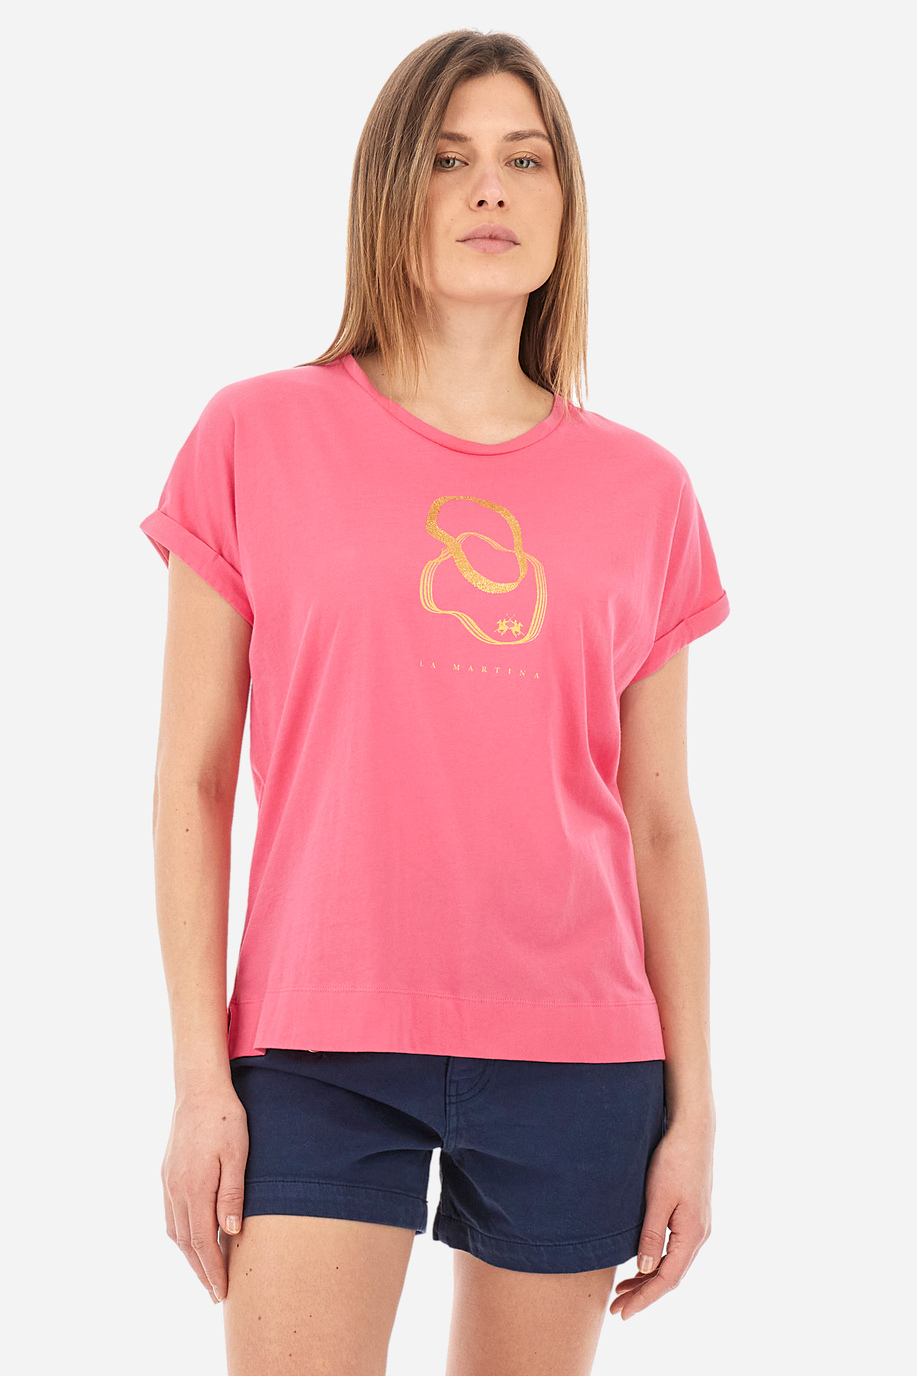 T-shirt regular fit in cotone - Yemina - Nuovi arrivi donna | La Martina - Official Online Shop